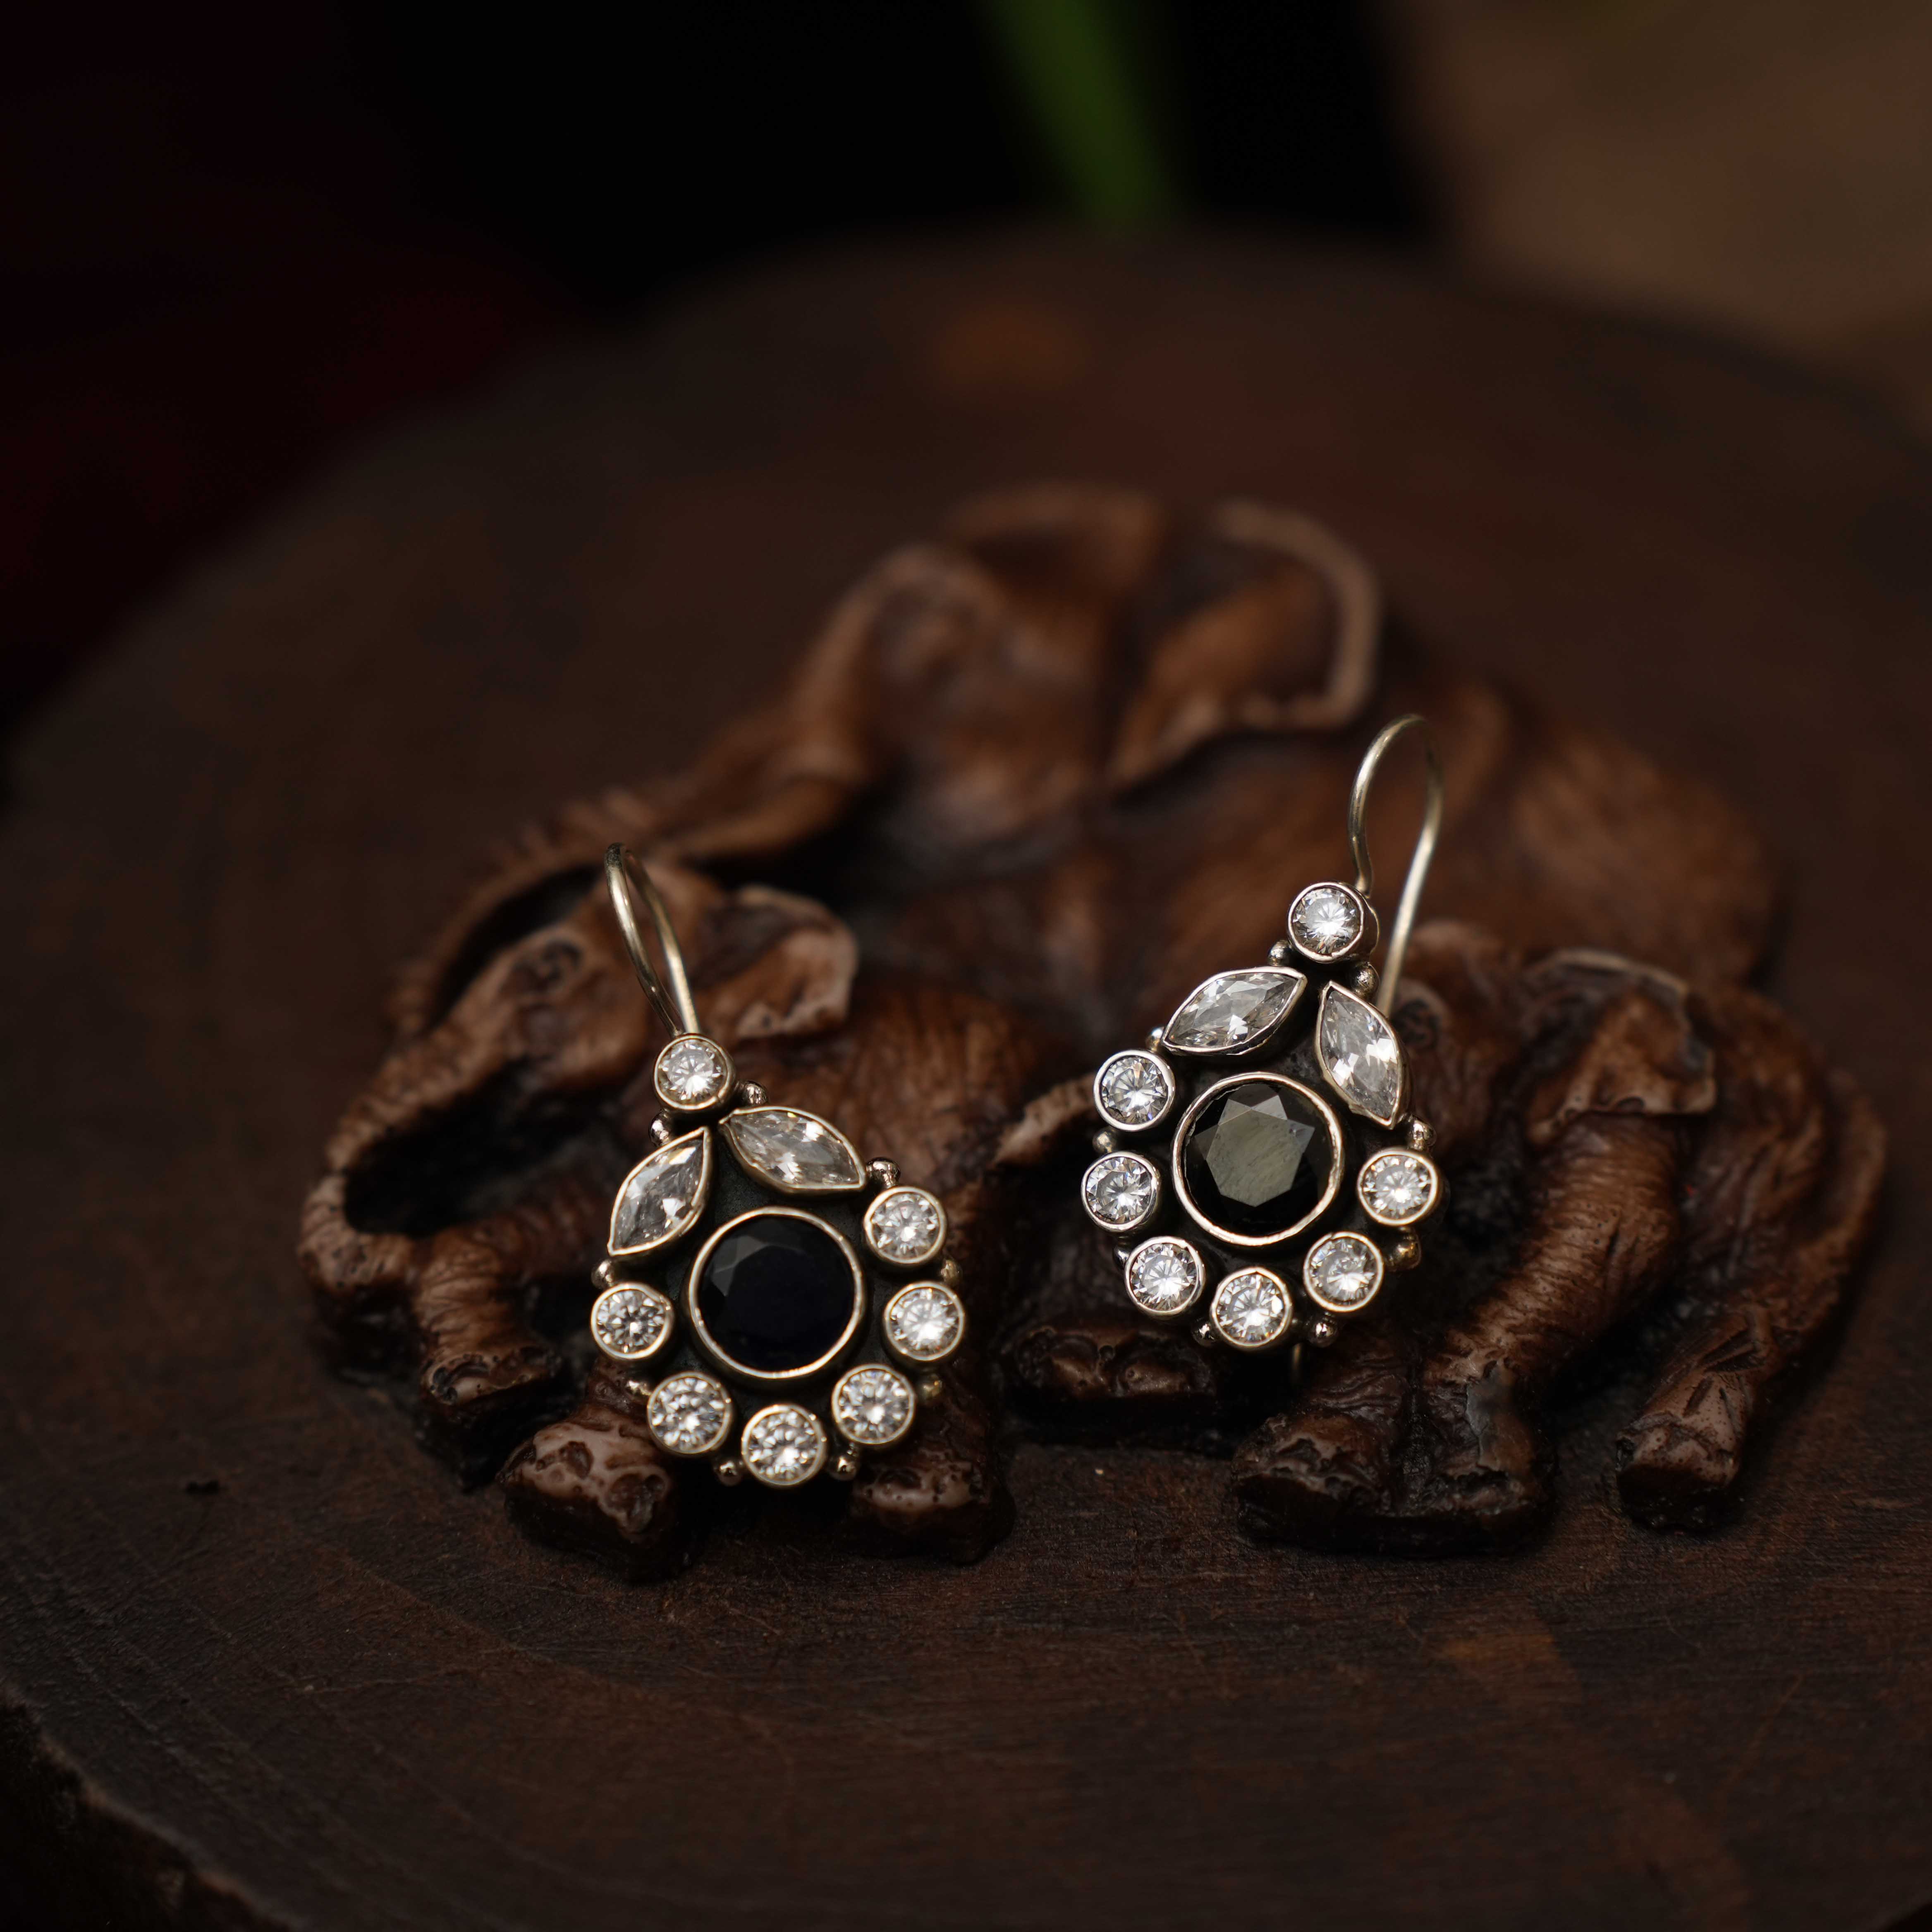 Shilpa 925 Oxidized Silver Earrings - Black